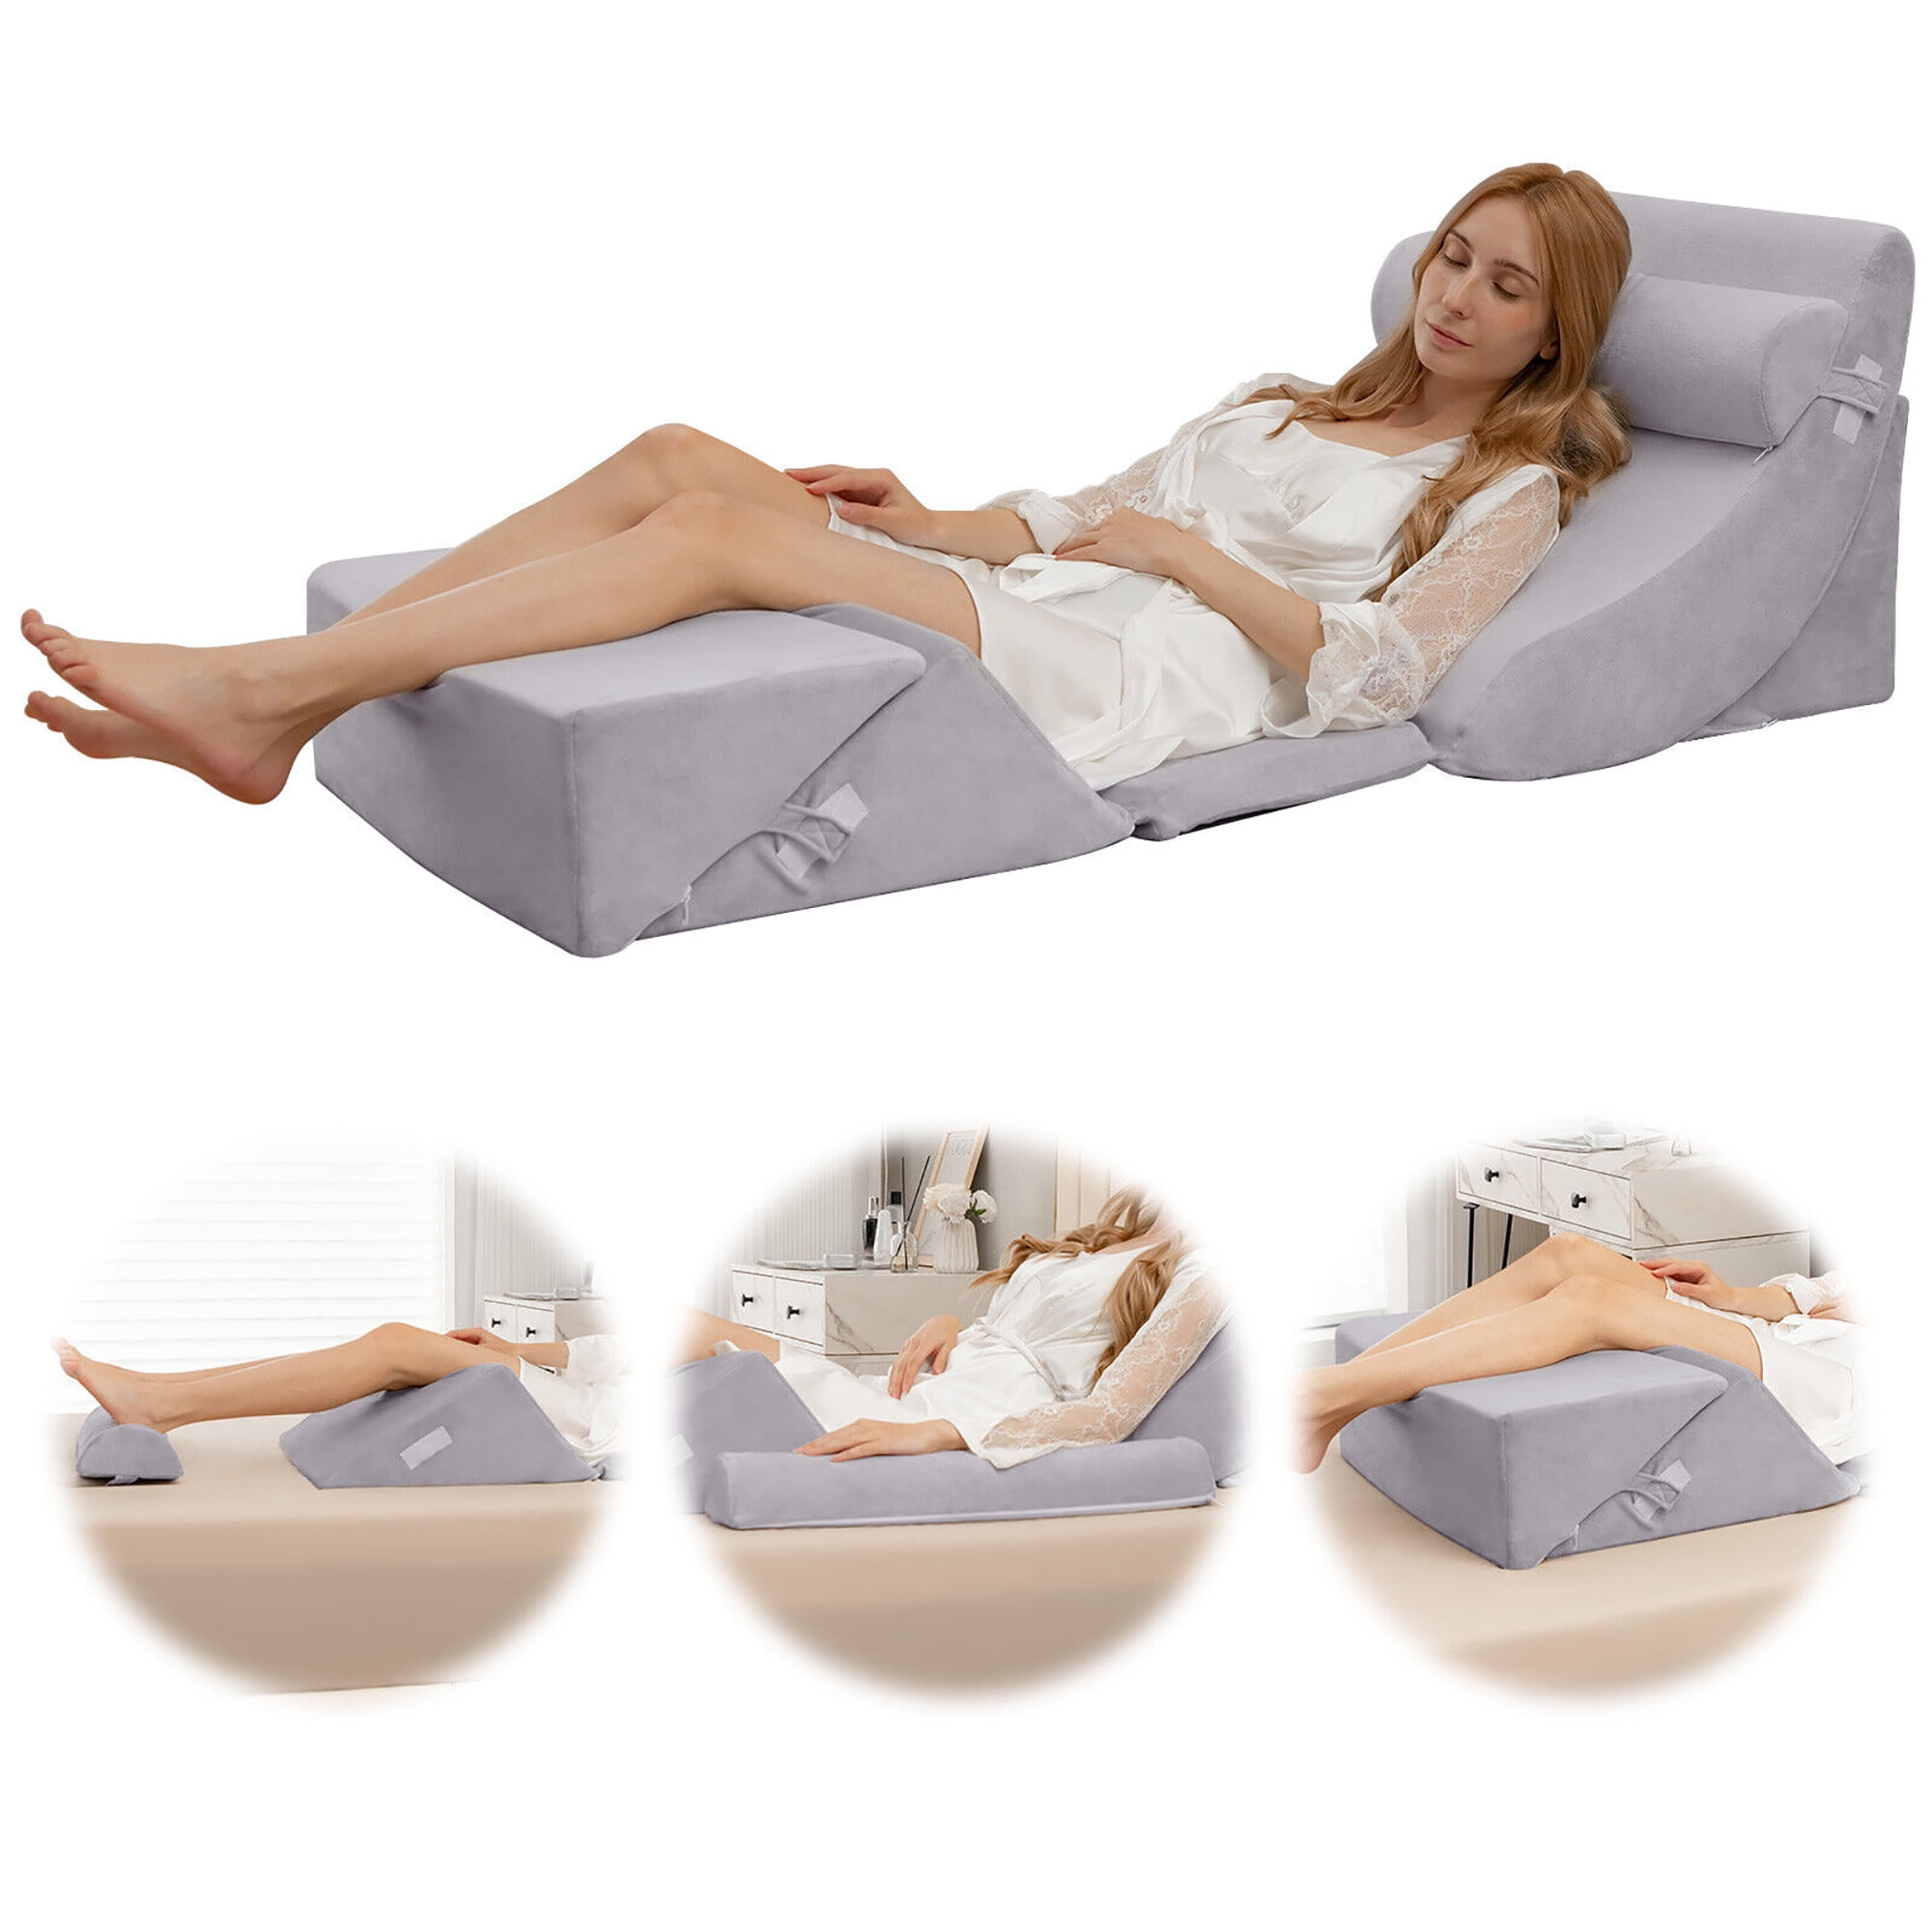 Mjkone 6PCS Orthopedic Bed Wedge Pillow for Sleeping